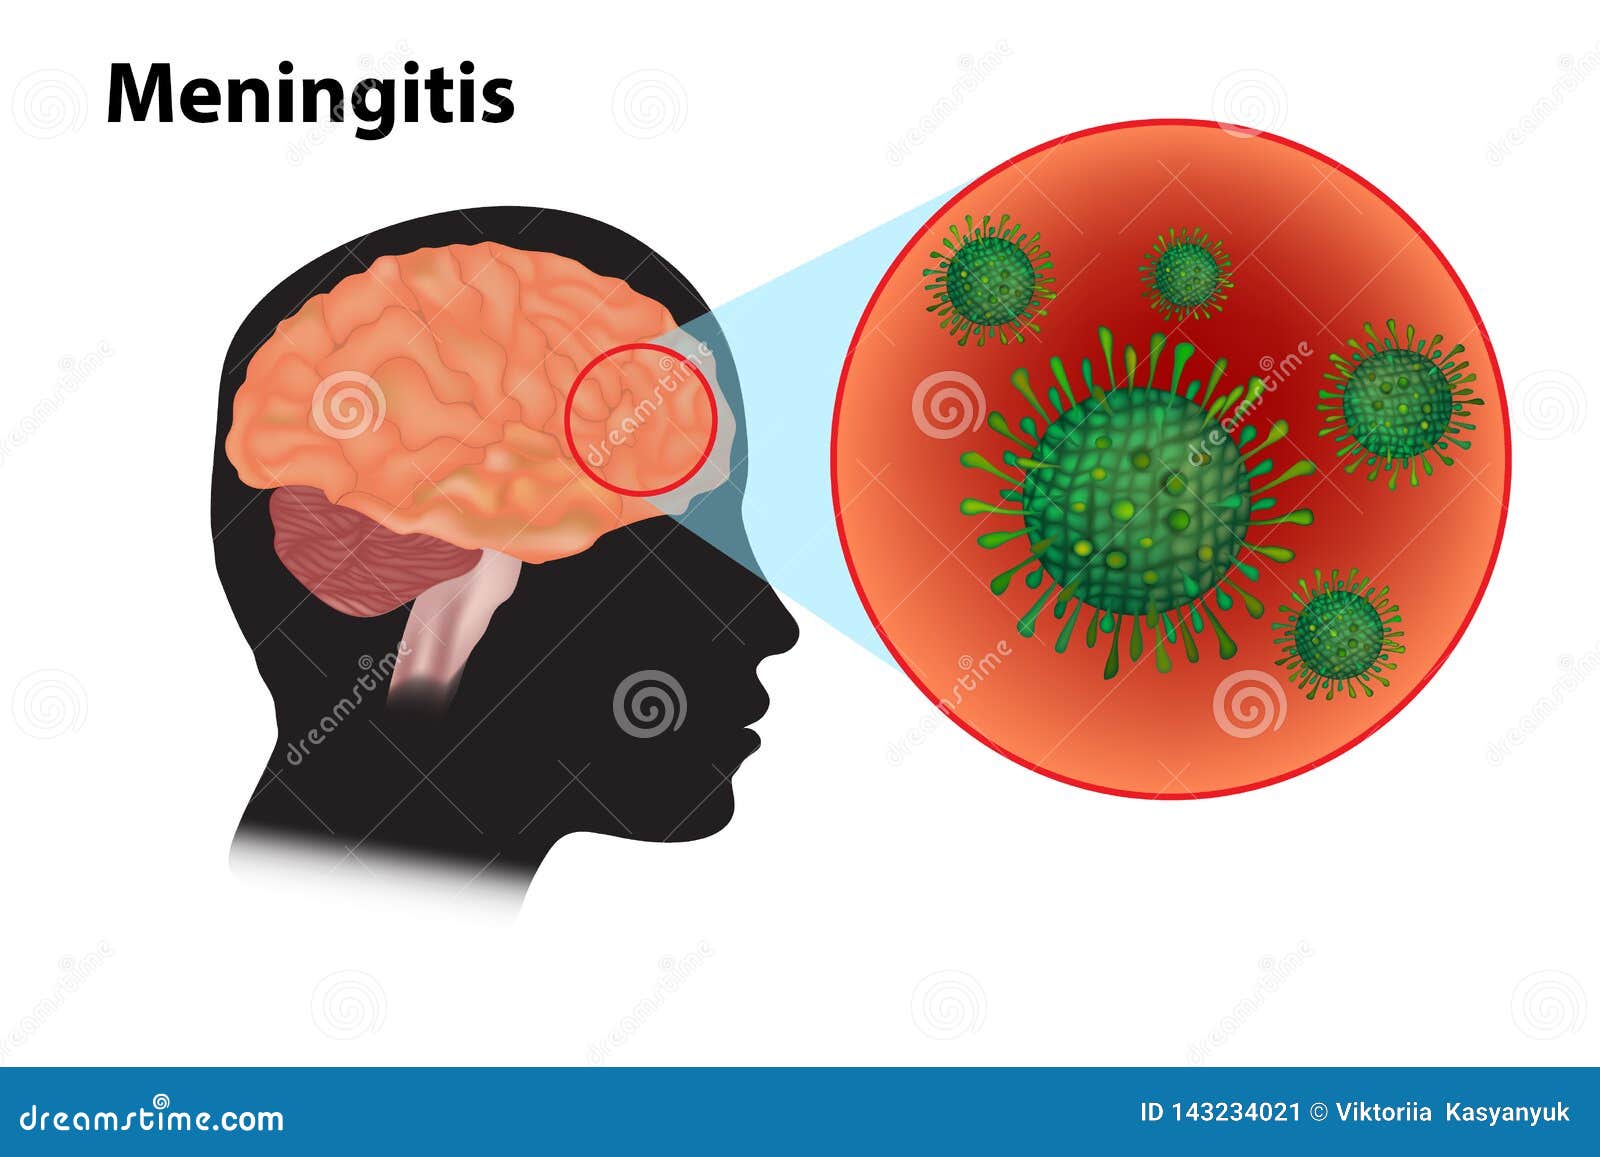 viral meningitis and encephalitis